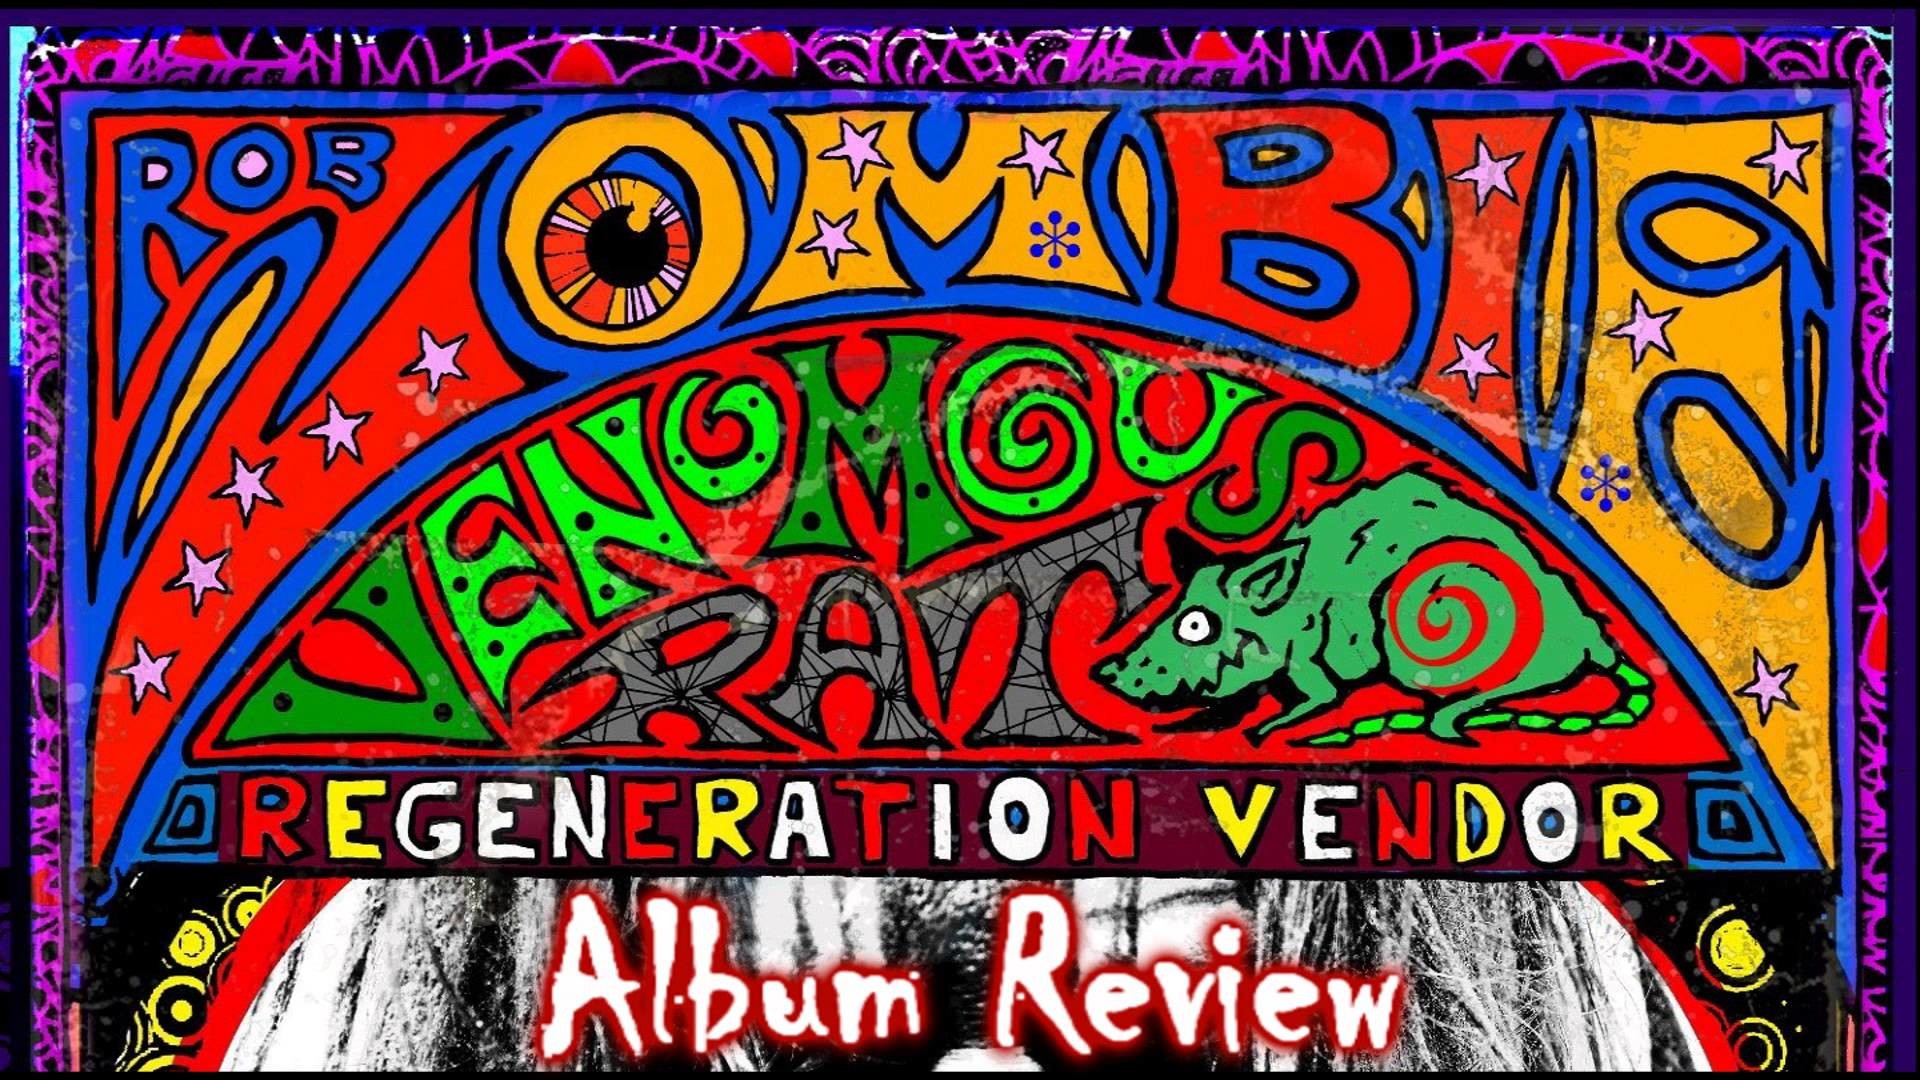 1920x1080 Rob Zombie - Venomous Rat Regeneration Vendor (2013) - Album Review [HD]